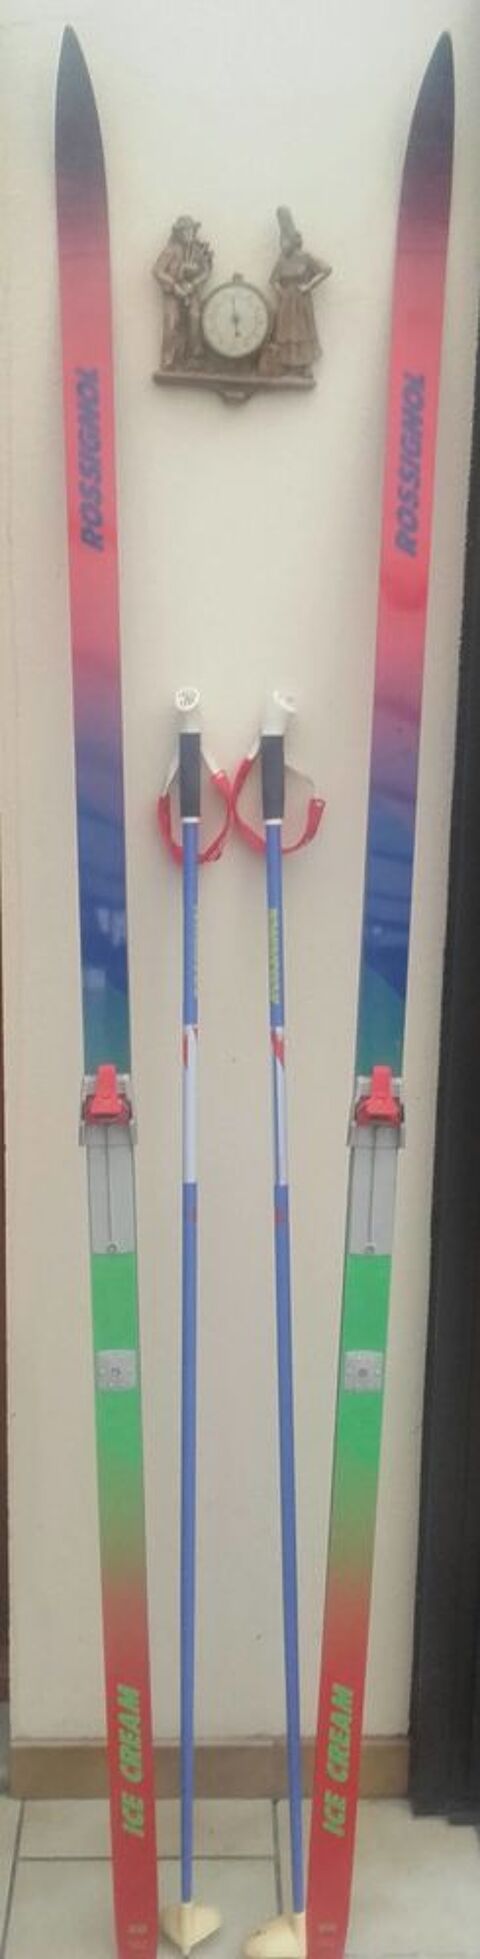 Skis de fond 50 Chmr (44)